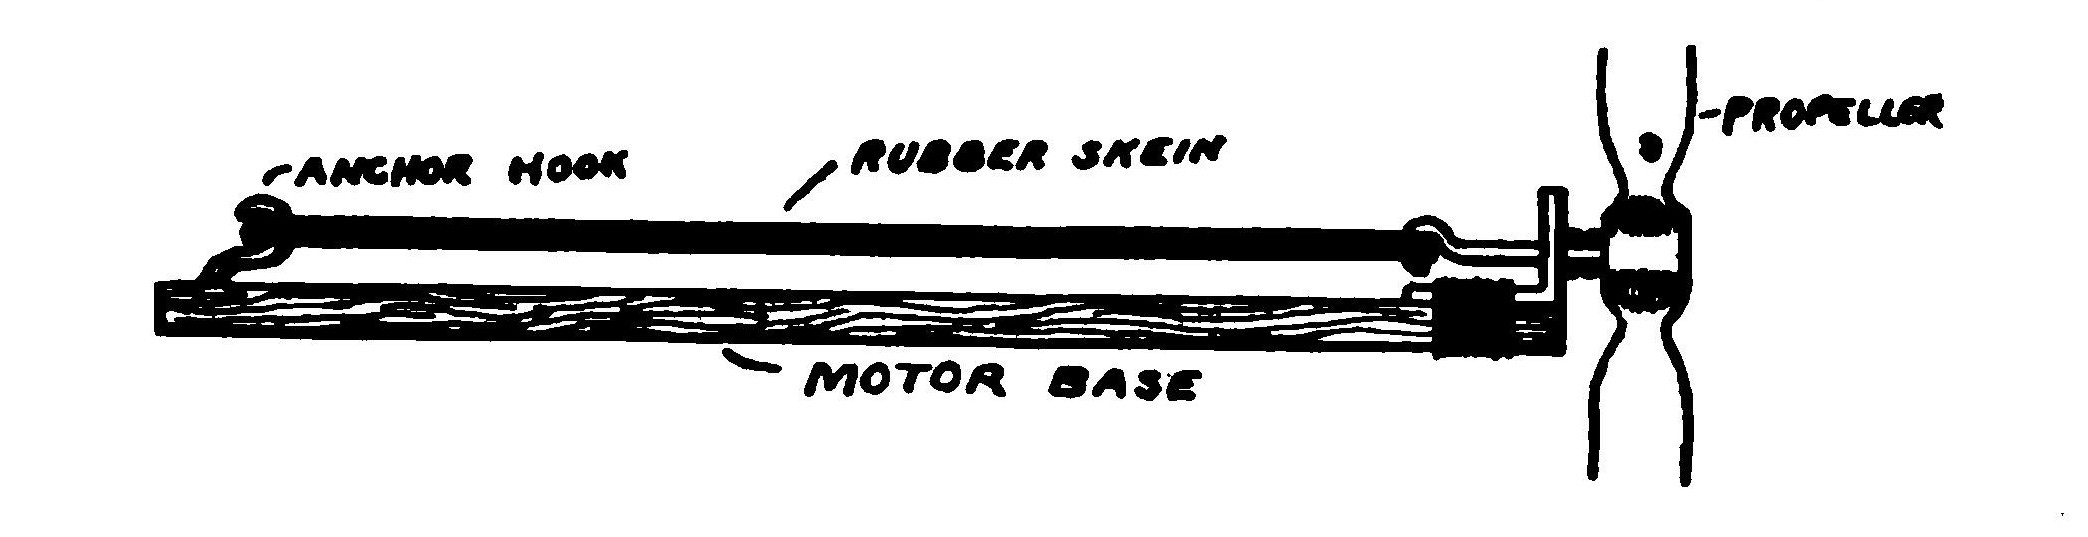 FIG. 21. A simple "motor base" or fusellage.